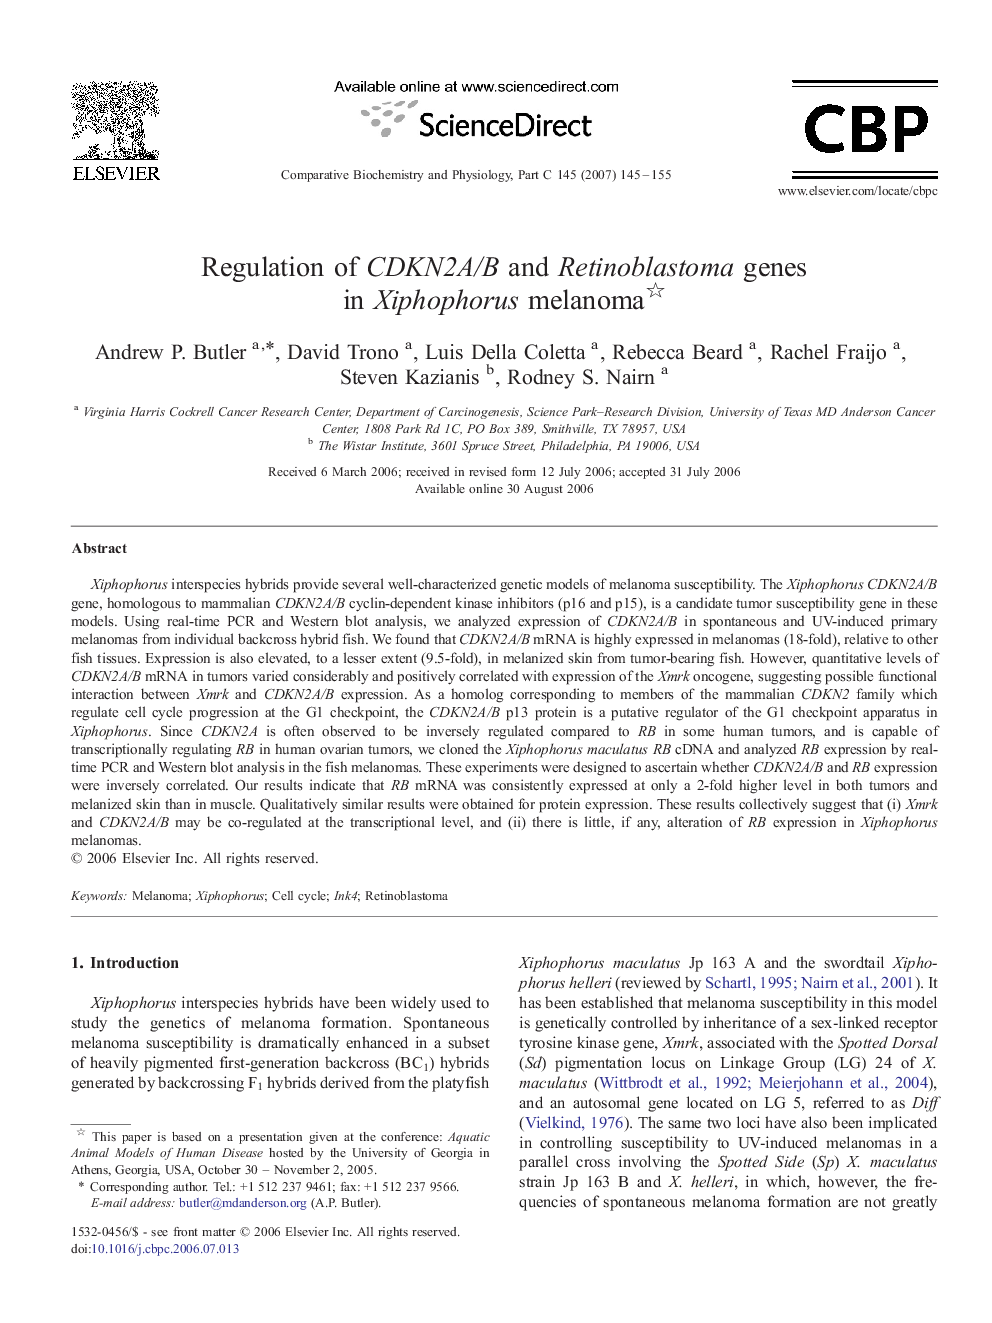 Regulation of CDKN2A/B and Retinoblastoma genes in Xiphophorus melanoma 